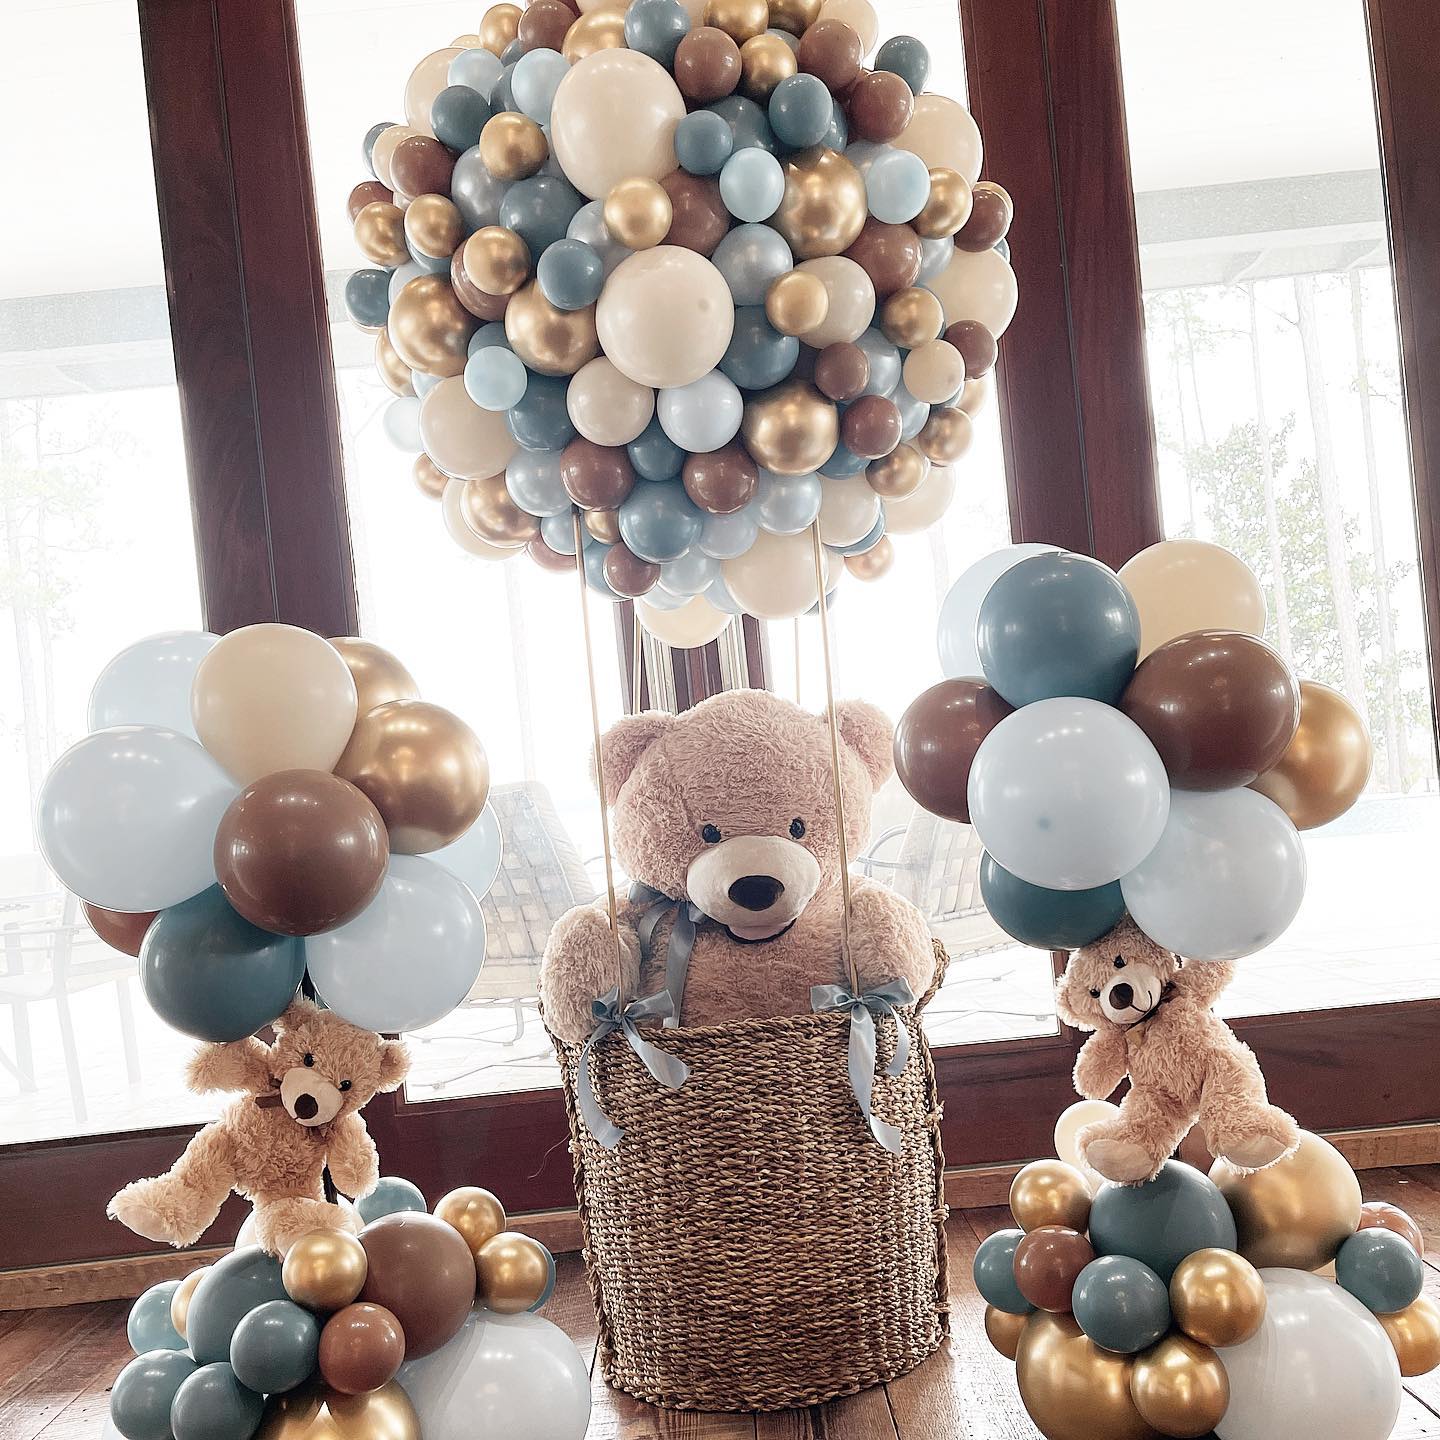 Babies are one of the “bear-y” best reasons to celebrate. 🐻 🍼 

#babyshower #hotairballoons #balloons #balloonstylist #bearthemebabyshower #organicballoons #santarosabeach #destin #pcb